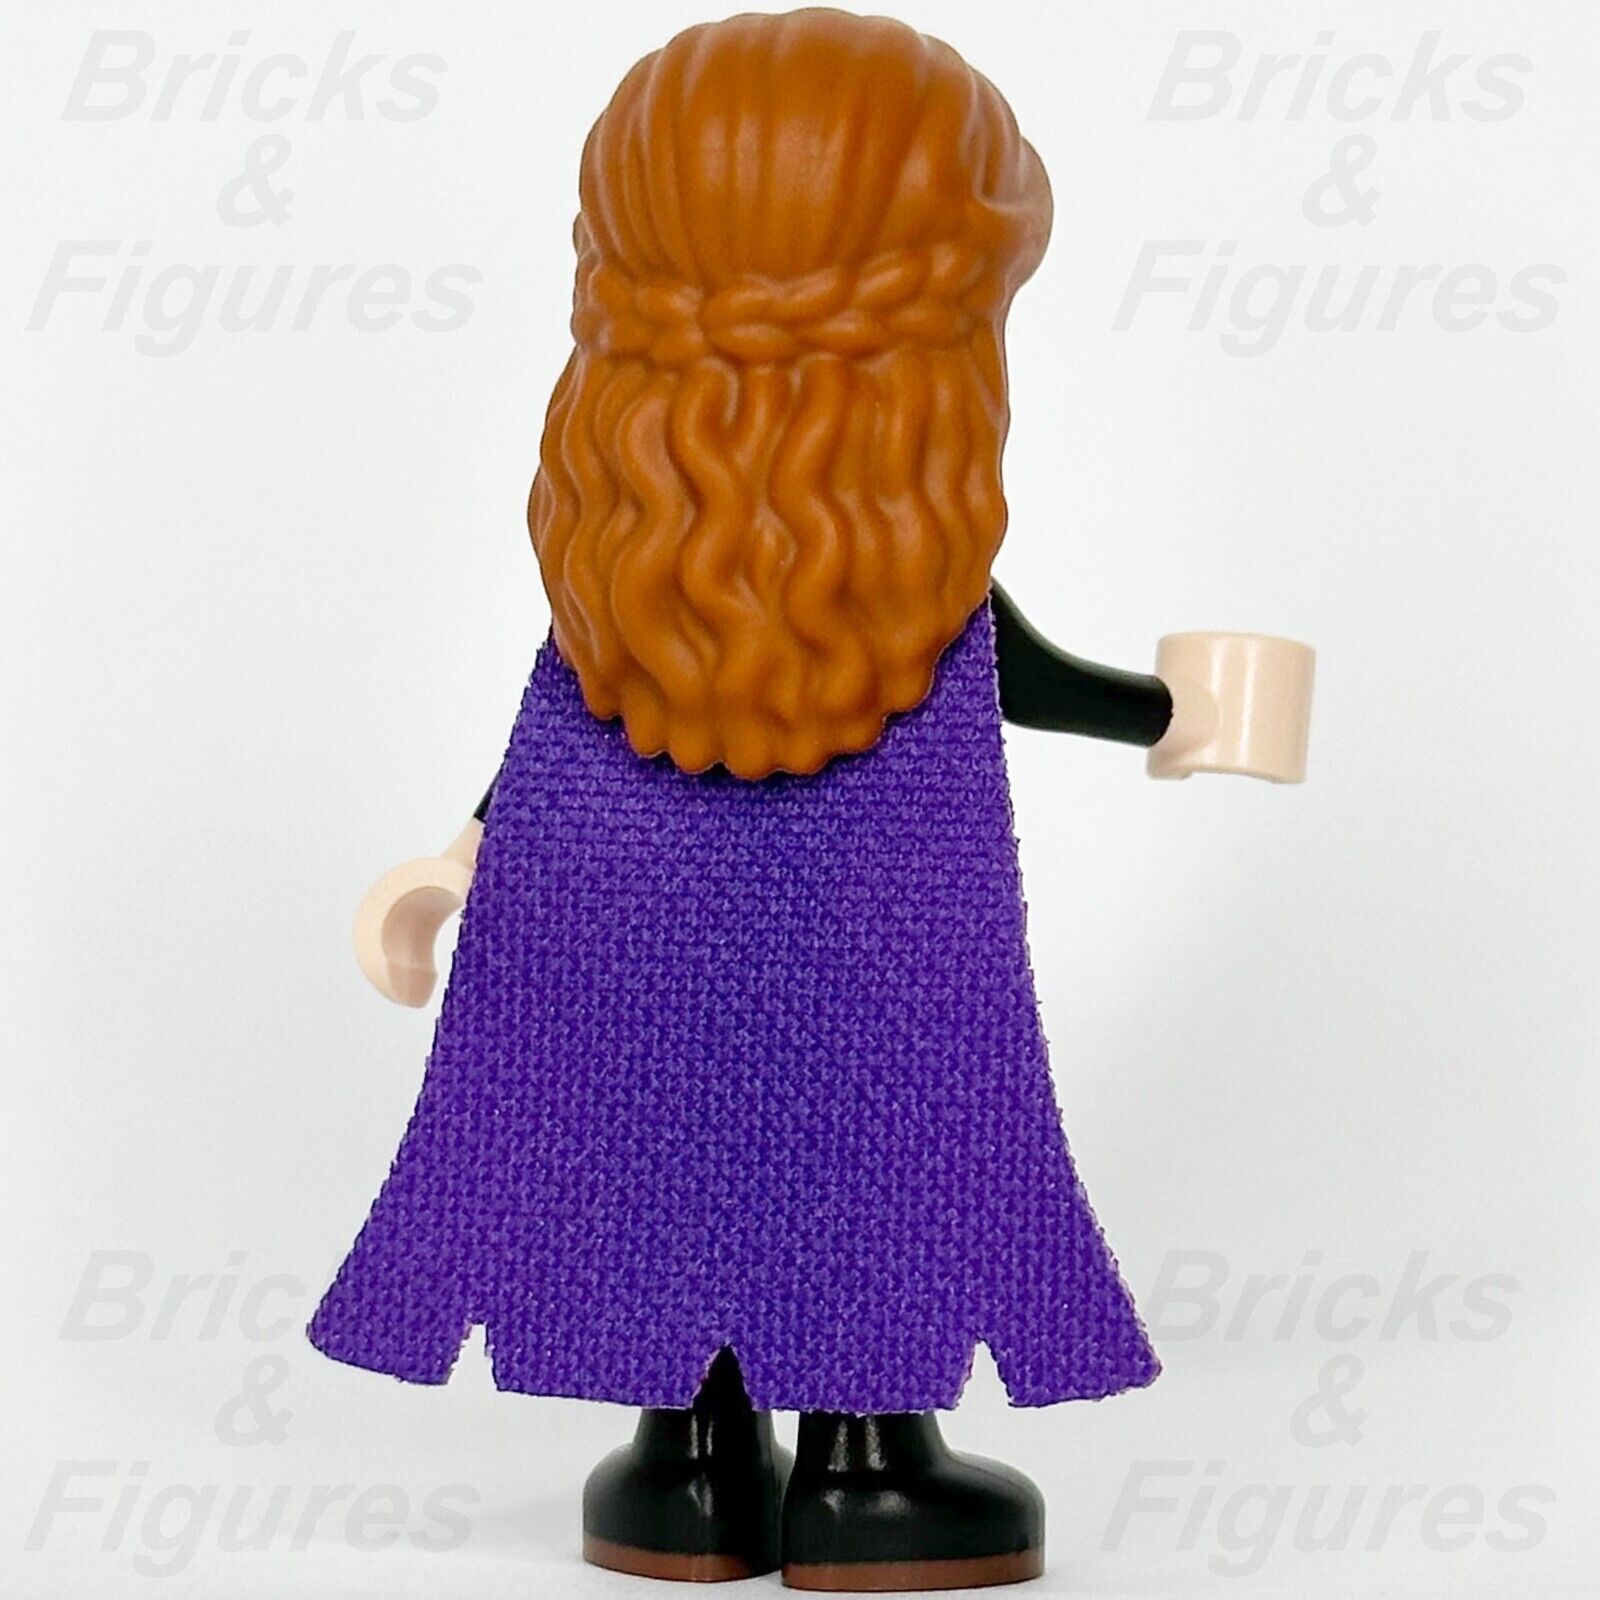 LEGO Disney Princess Anna Minifigure Frozen 2 Black Dress 41164 41165 dp073 - Bricks & Figures